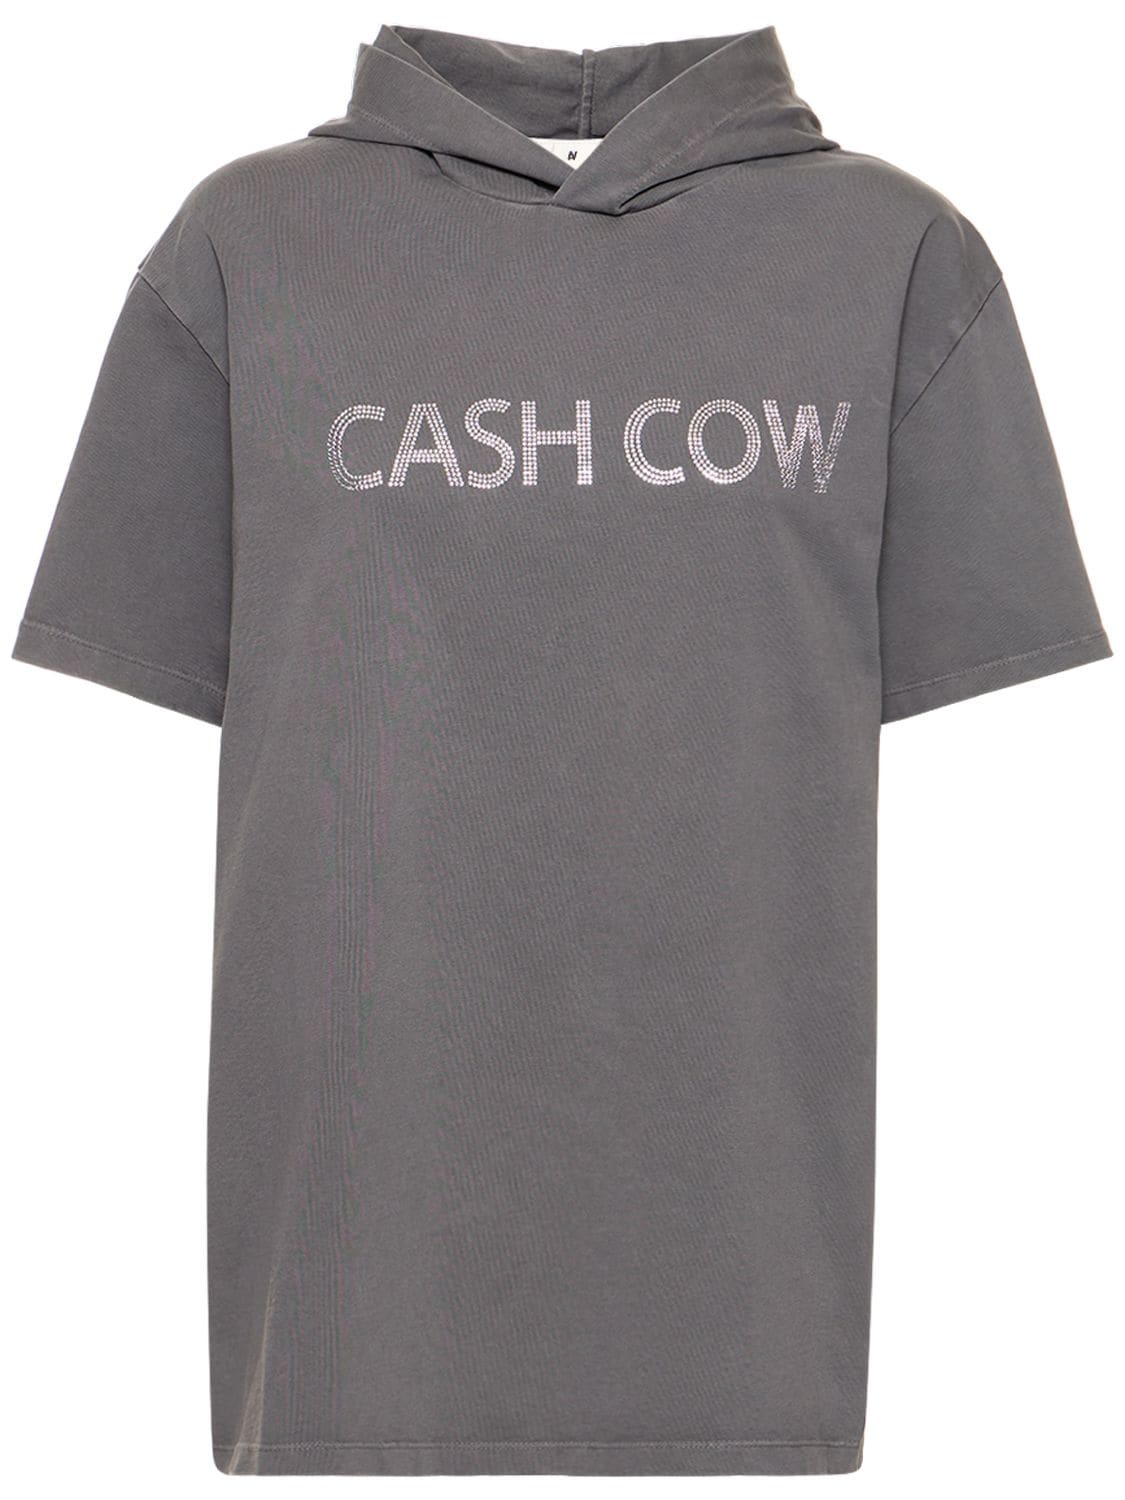 Avavav Hooded Cash Cow T-shirt In Grey